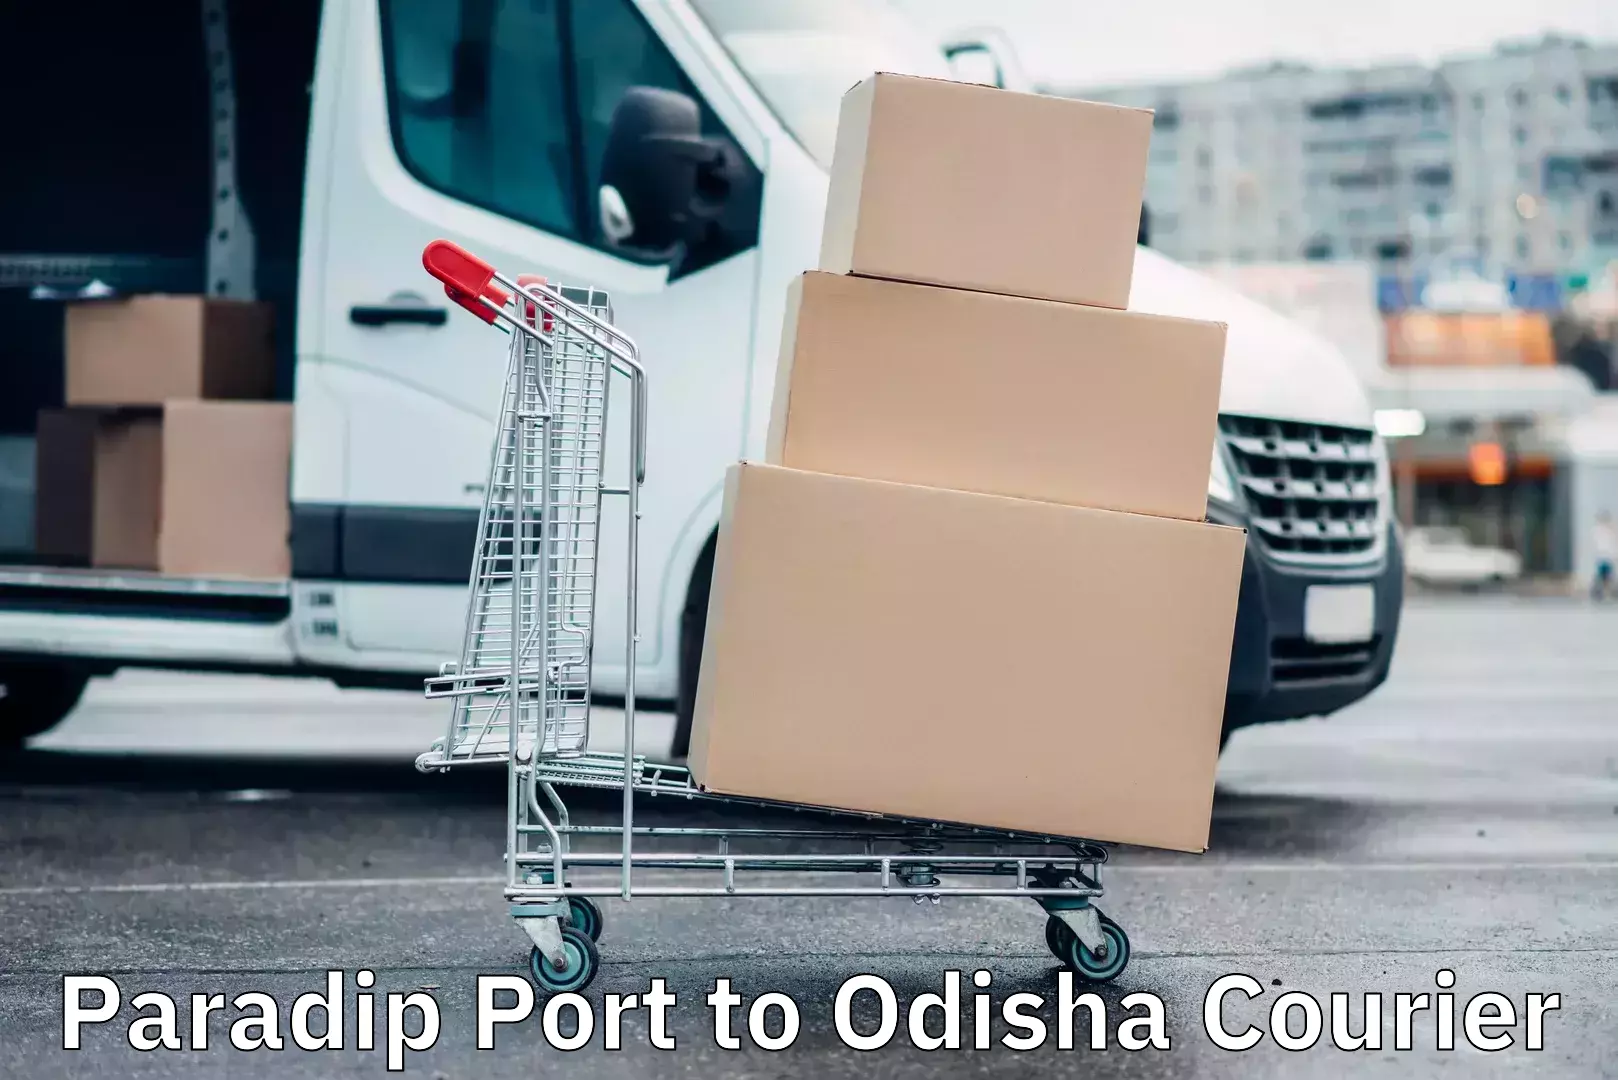 Courier service efficiency Paradip Port to Odisha